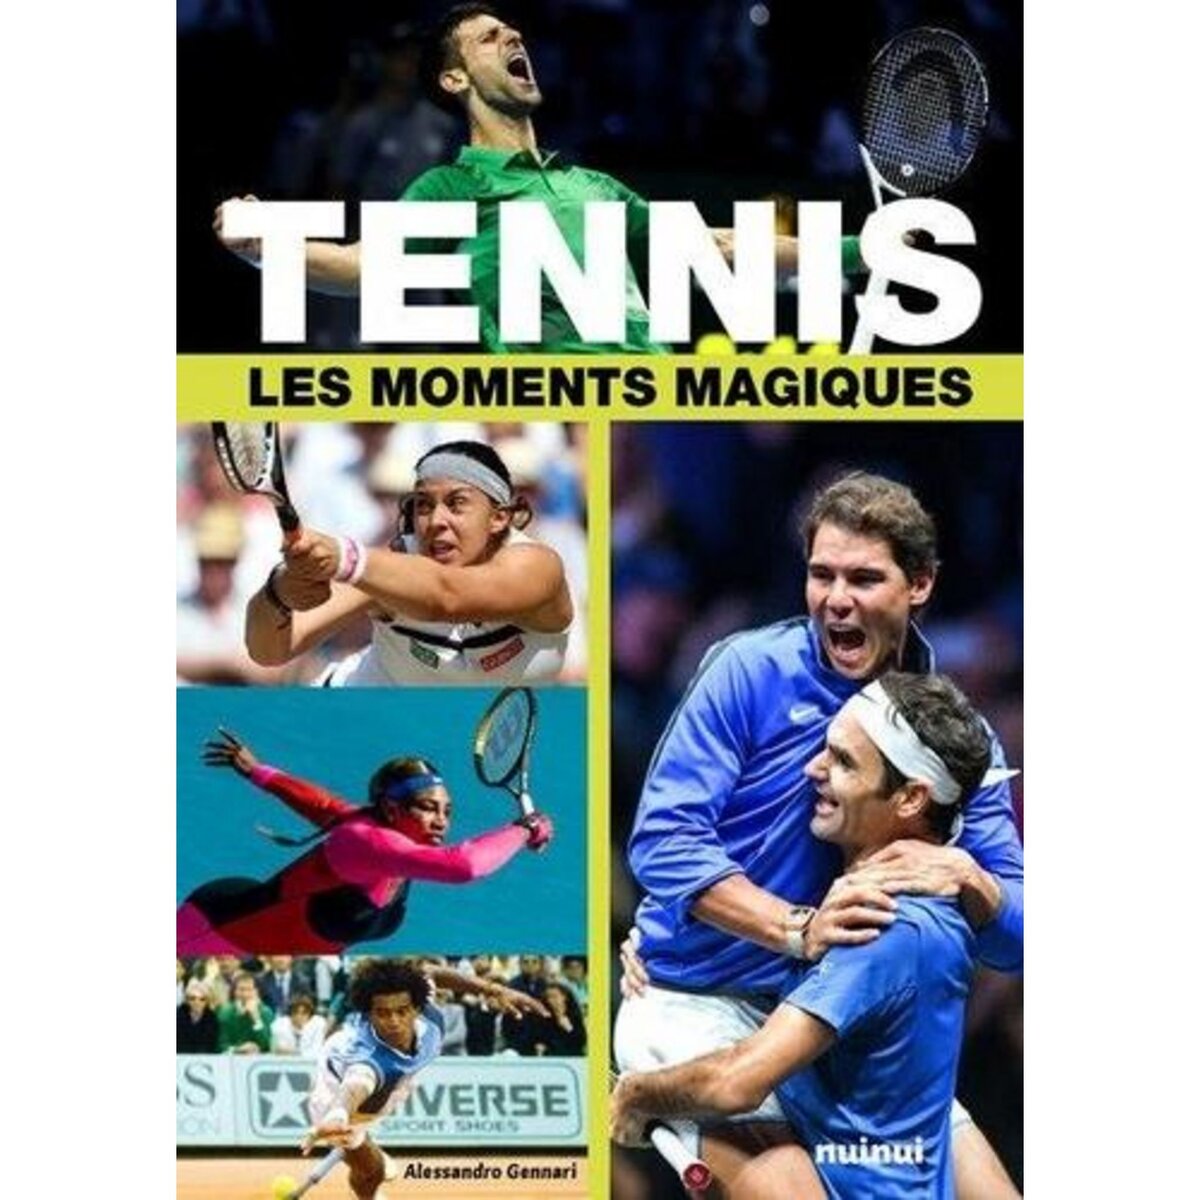 ALESSANDRO GENNARI - Tennis : les moments magiques - Sports - LIVRES -   - Livres + cadeaux + jeux